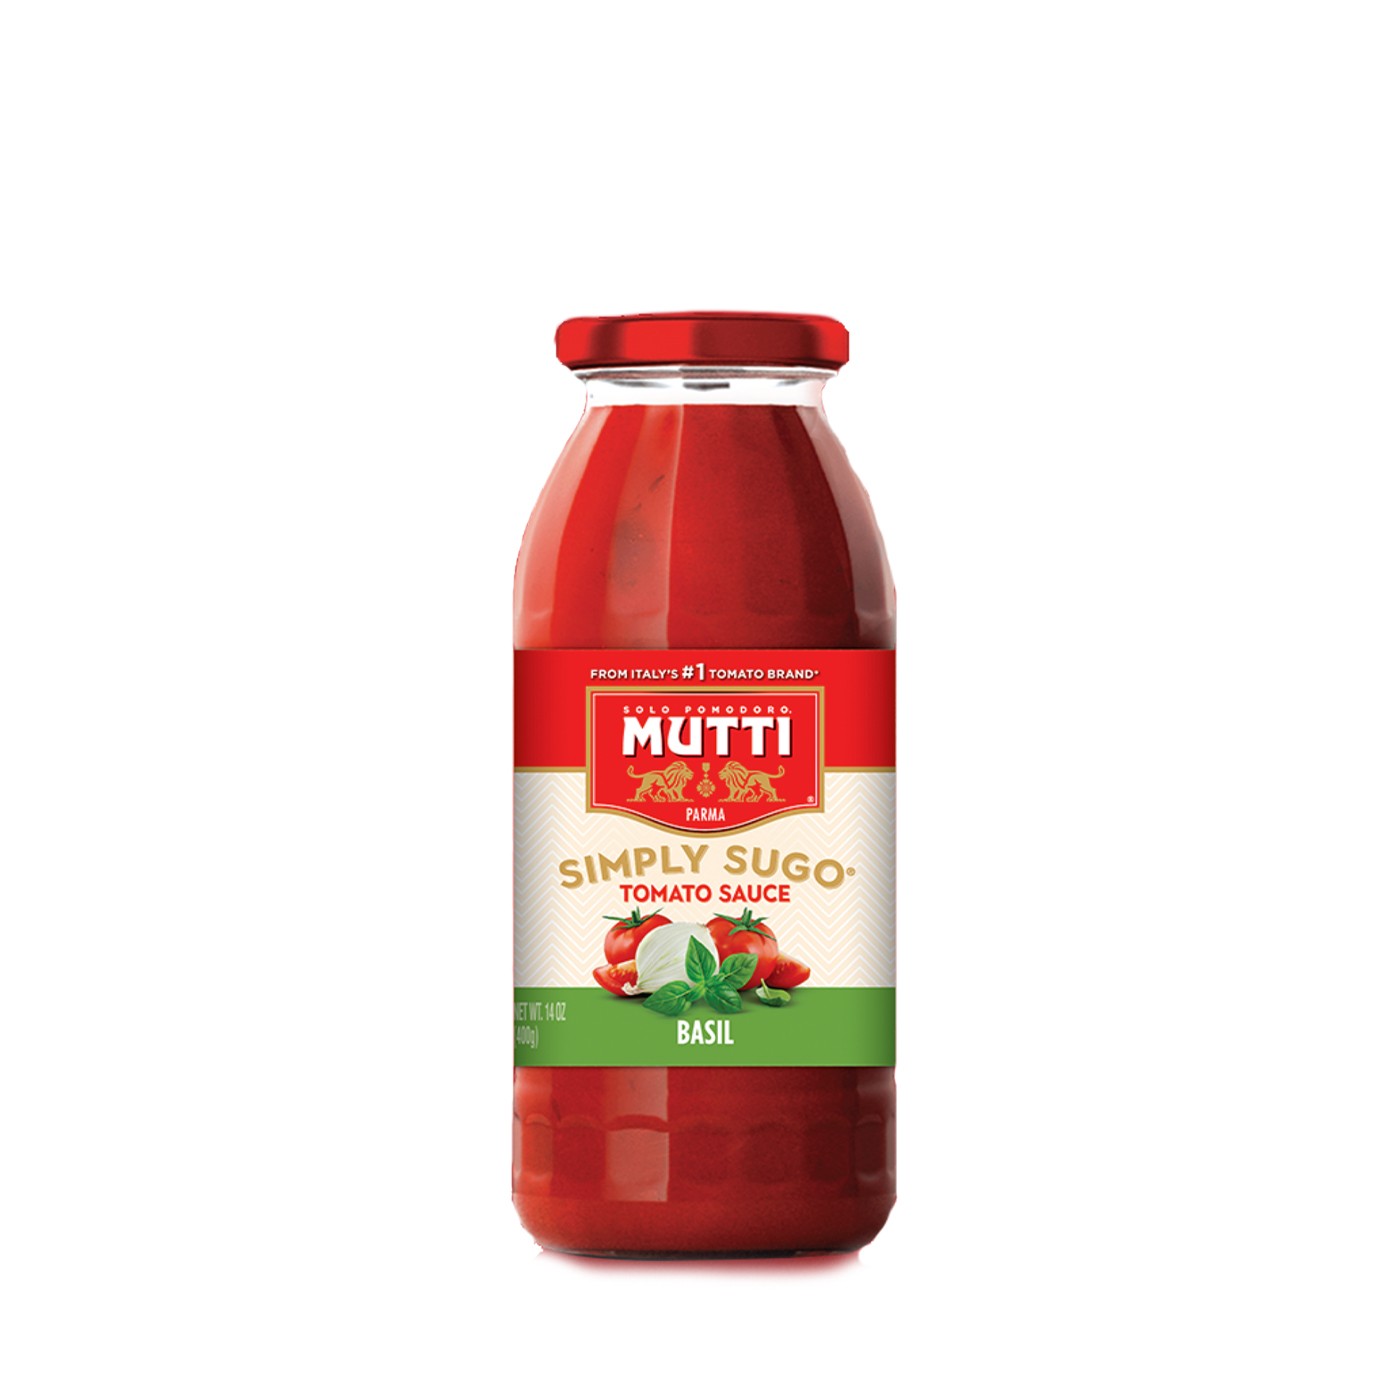  Simply Sugo Basil Tomato Sauce  14oz